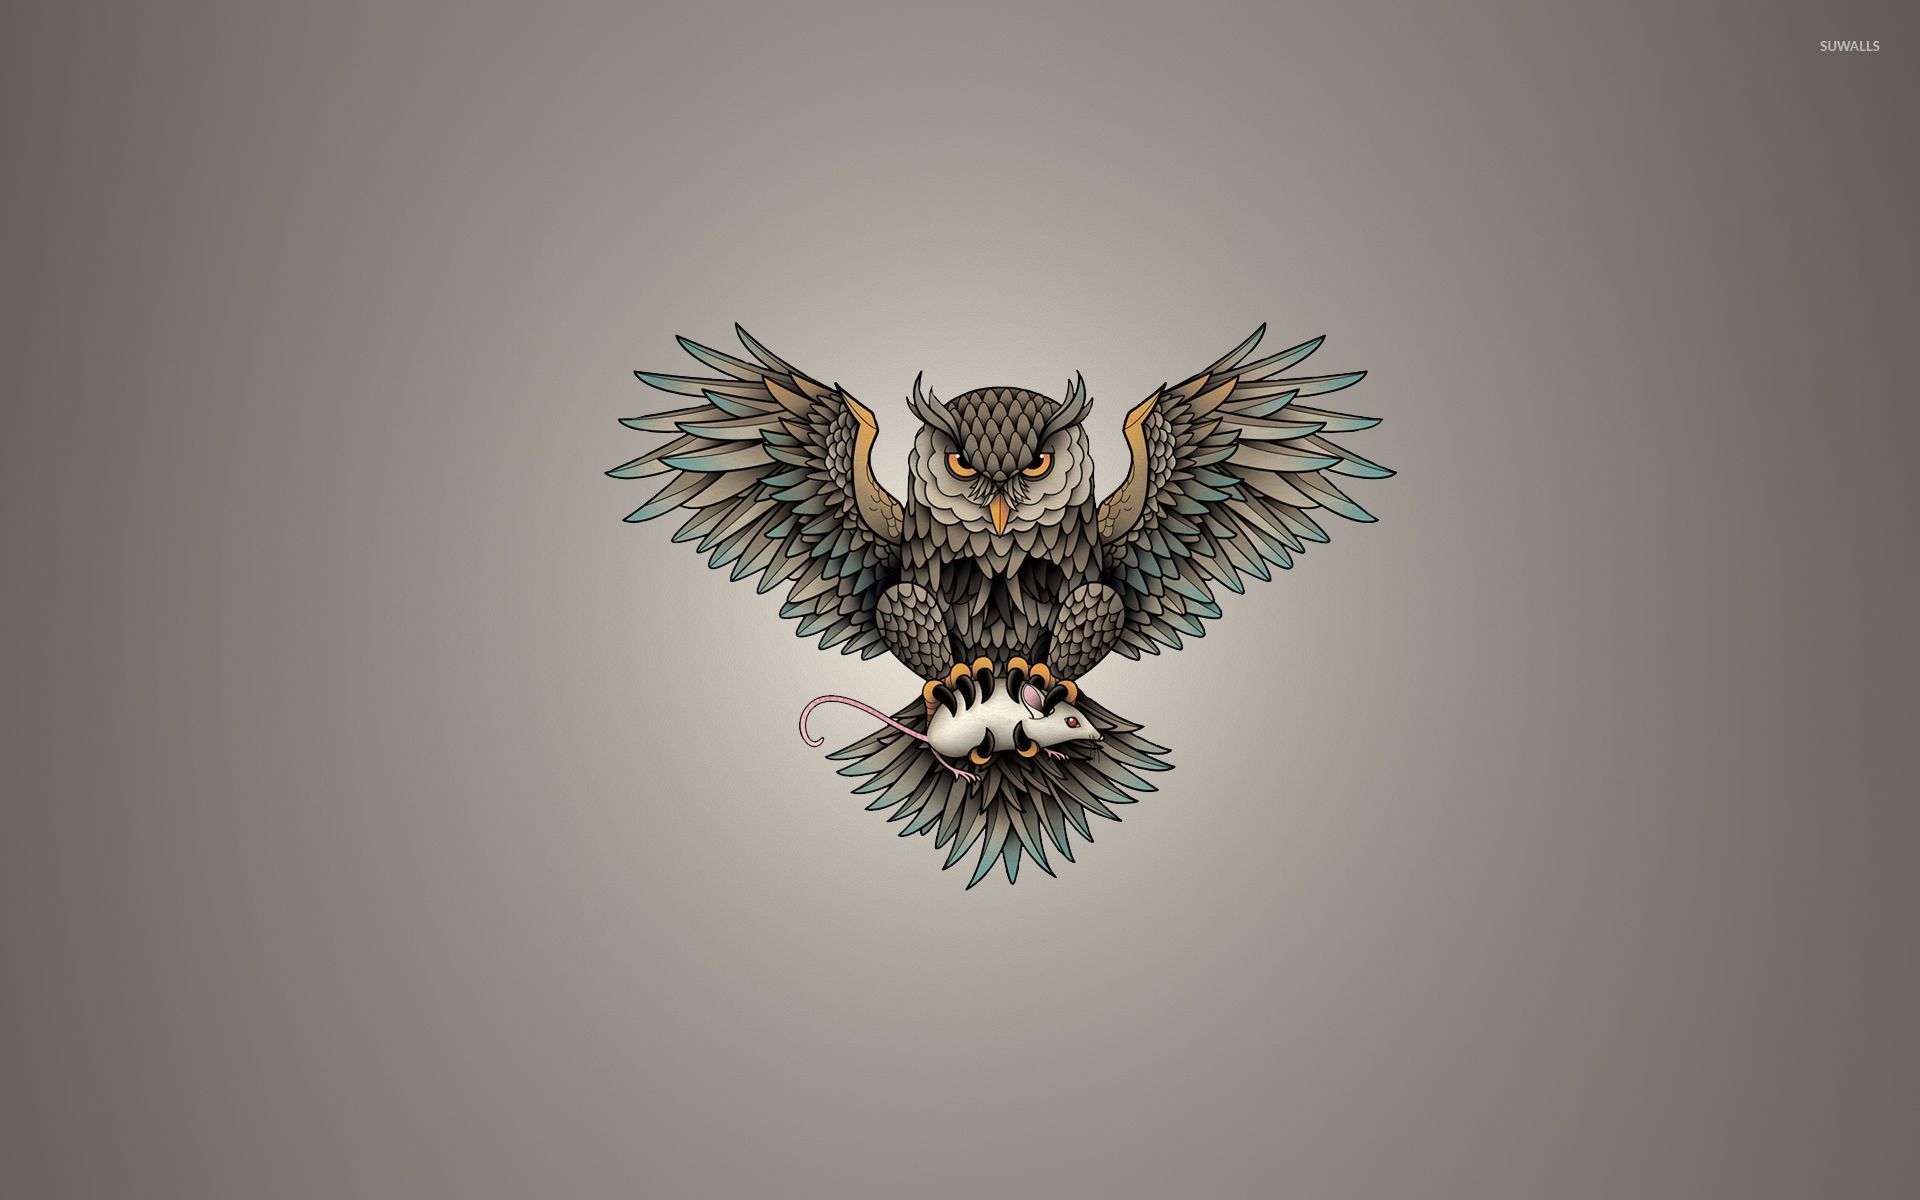 Fondo de pantalla de Owl holding the mouse - Fondos de arte digital - # 53713